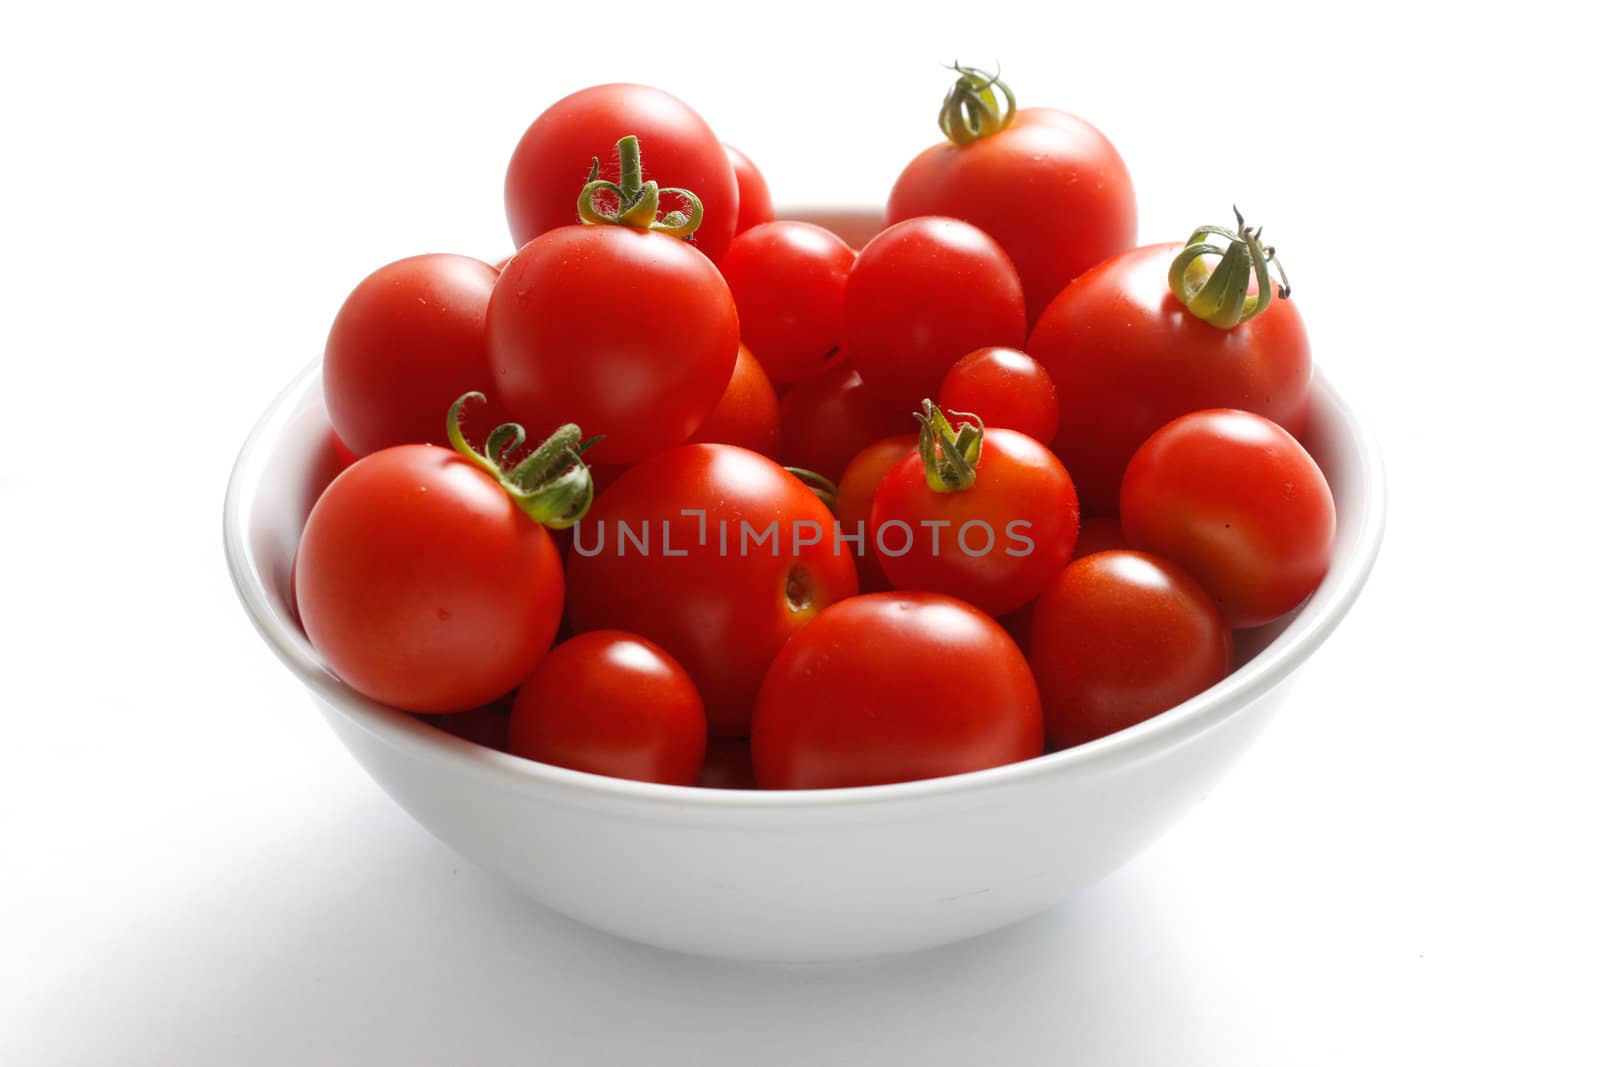 Cherry tomatoes by leeser